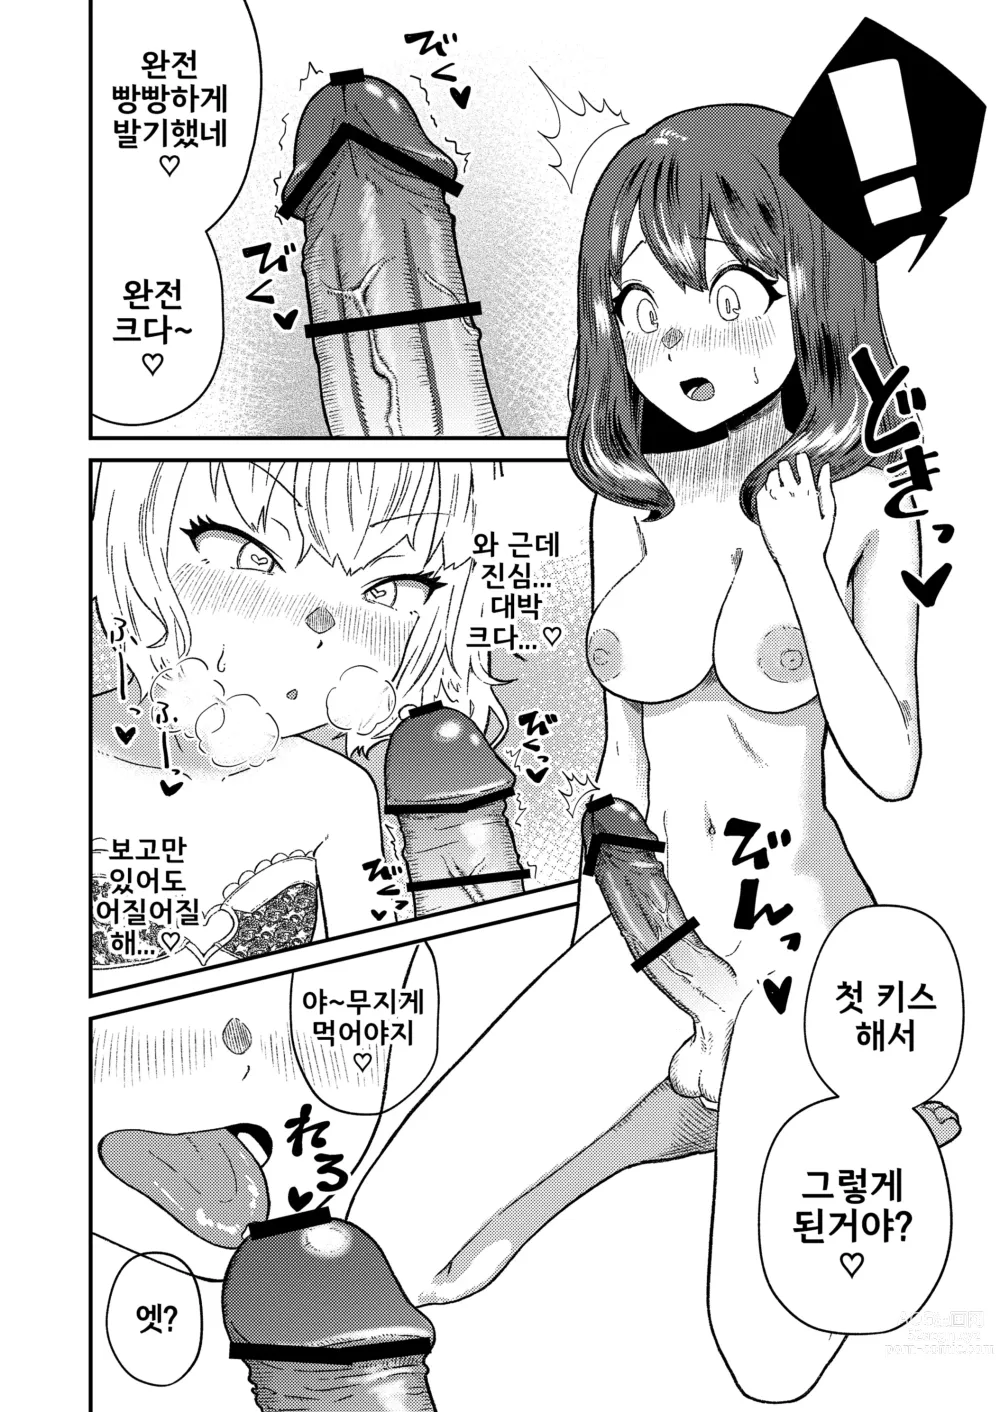 Page 10 of doujinshi 암컷 갸루 낭자애가 후타나리 언니를 '이해'하는 이야기